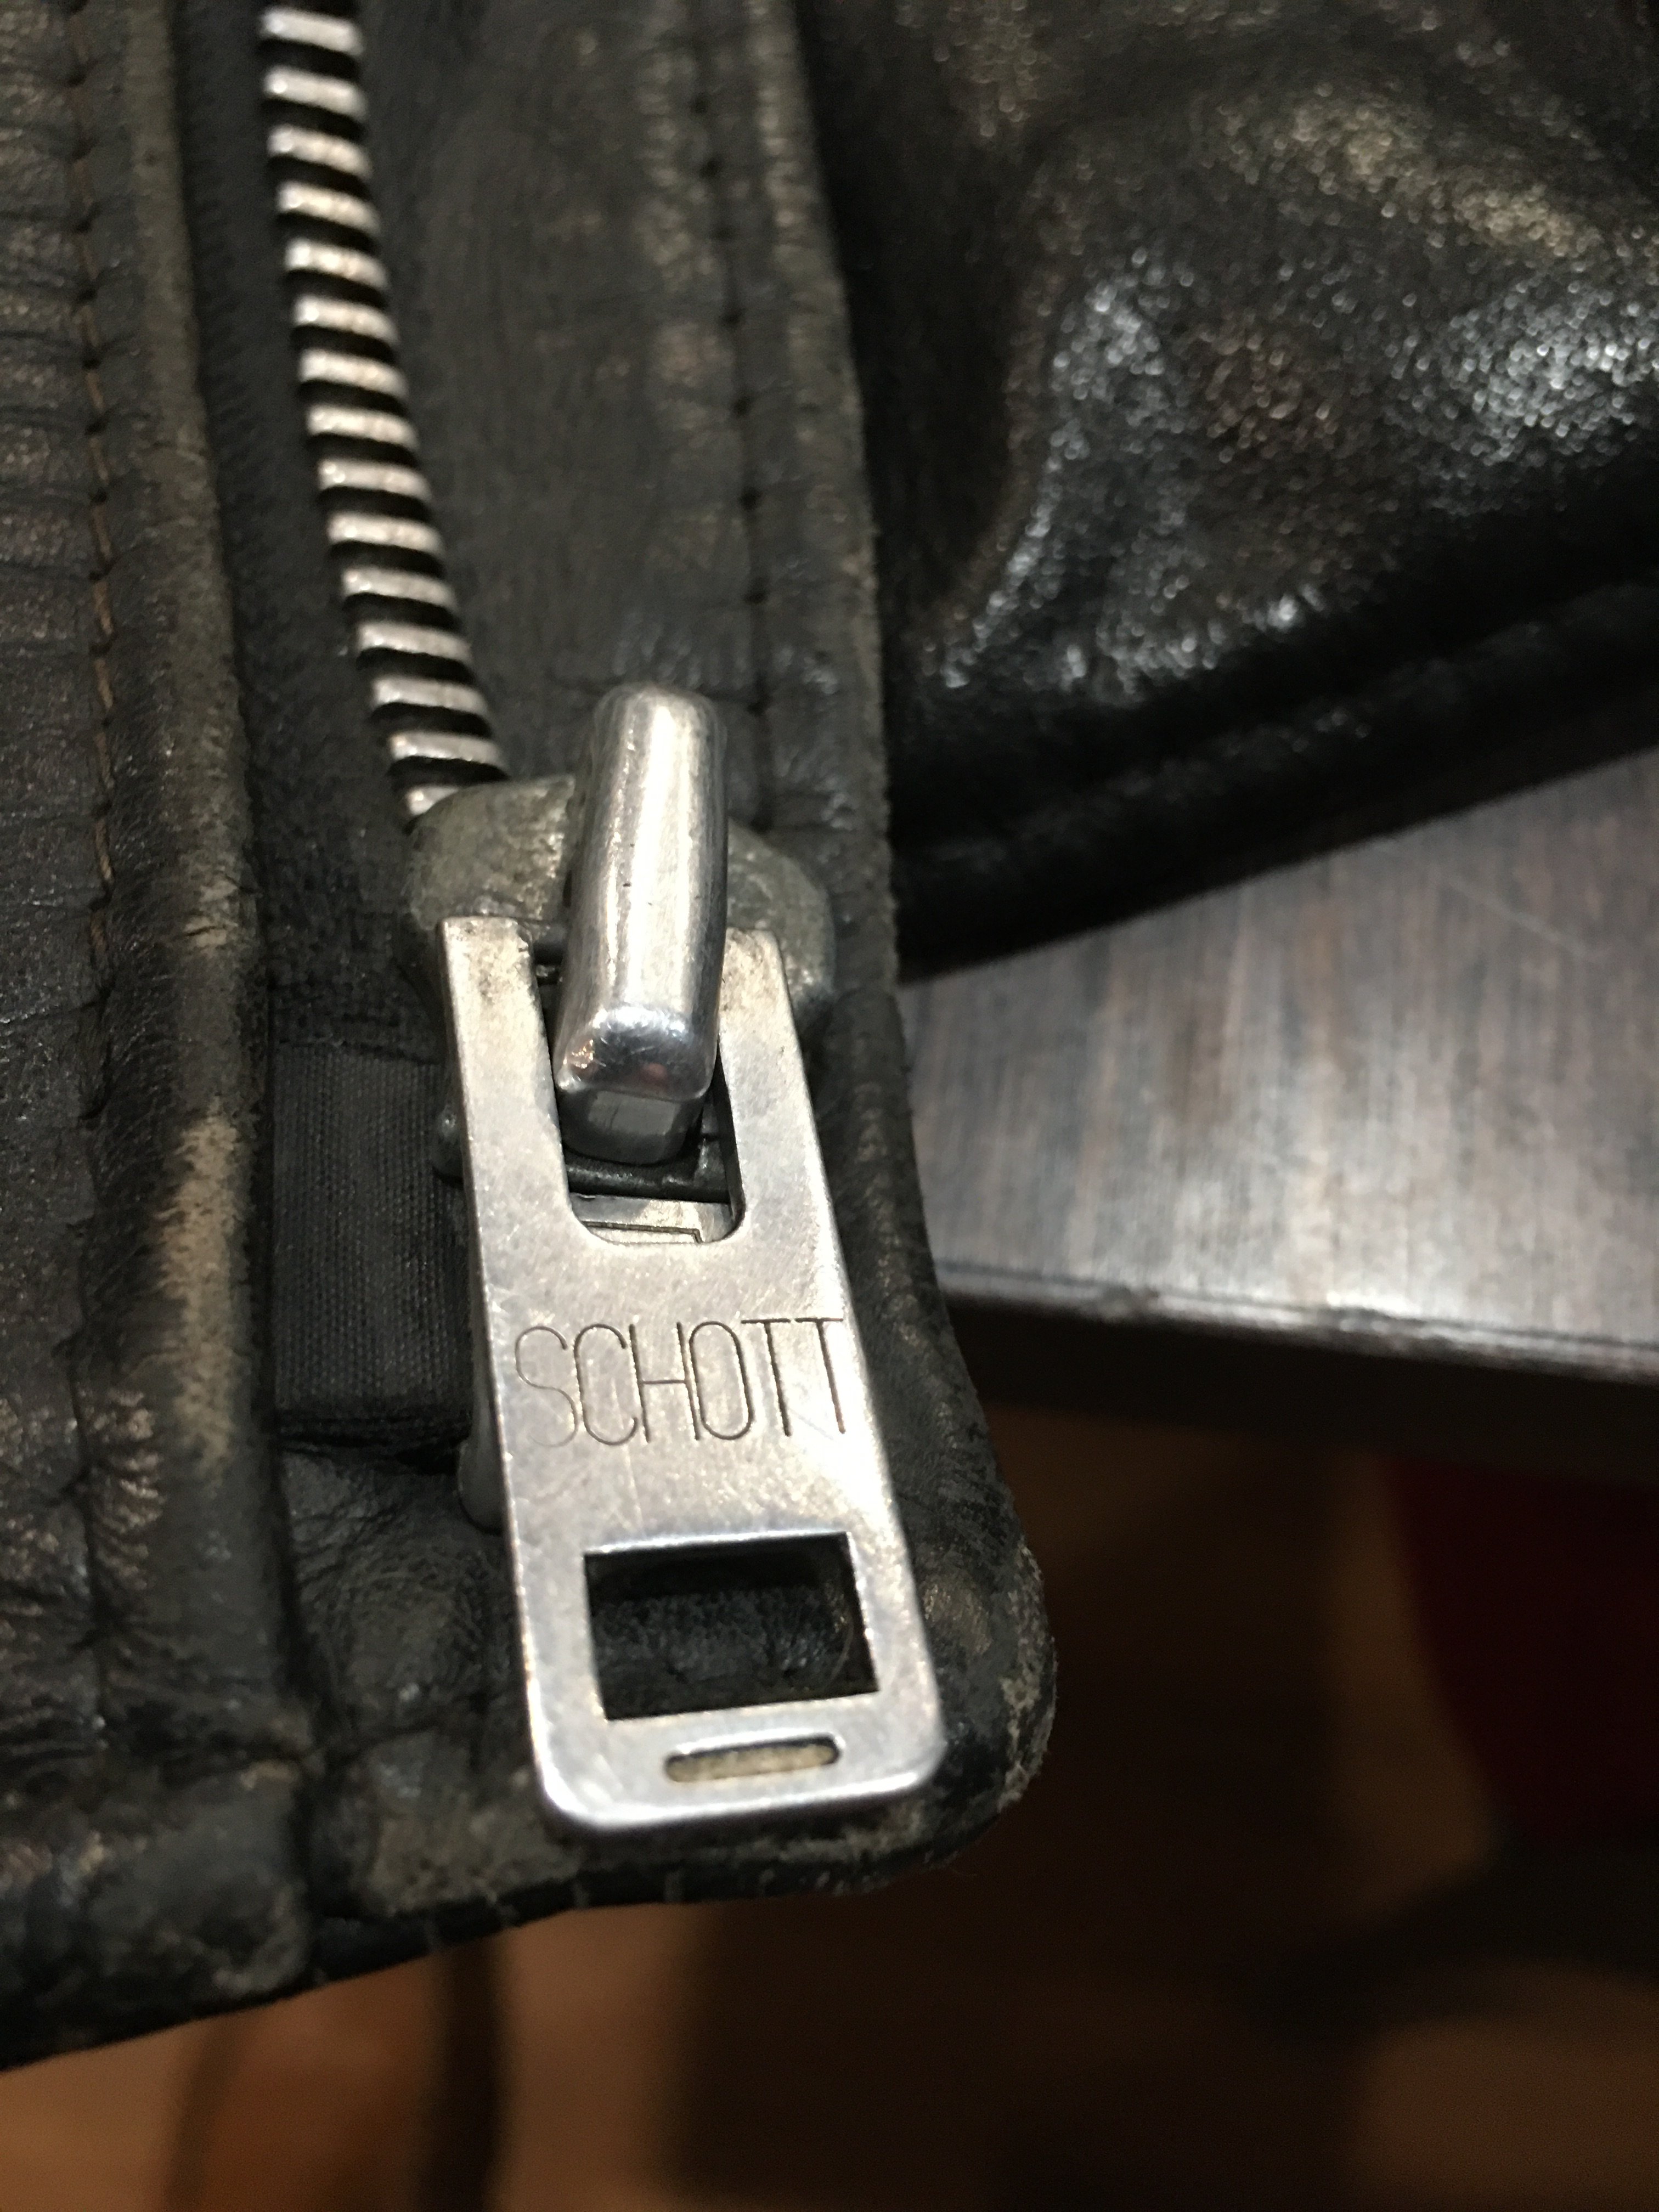 Prototype Schott? | Vintage Leather Jackets Forum